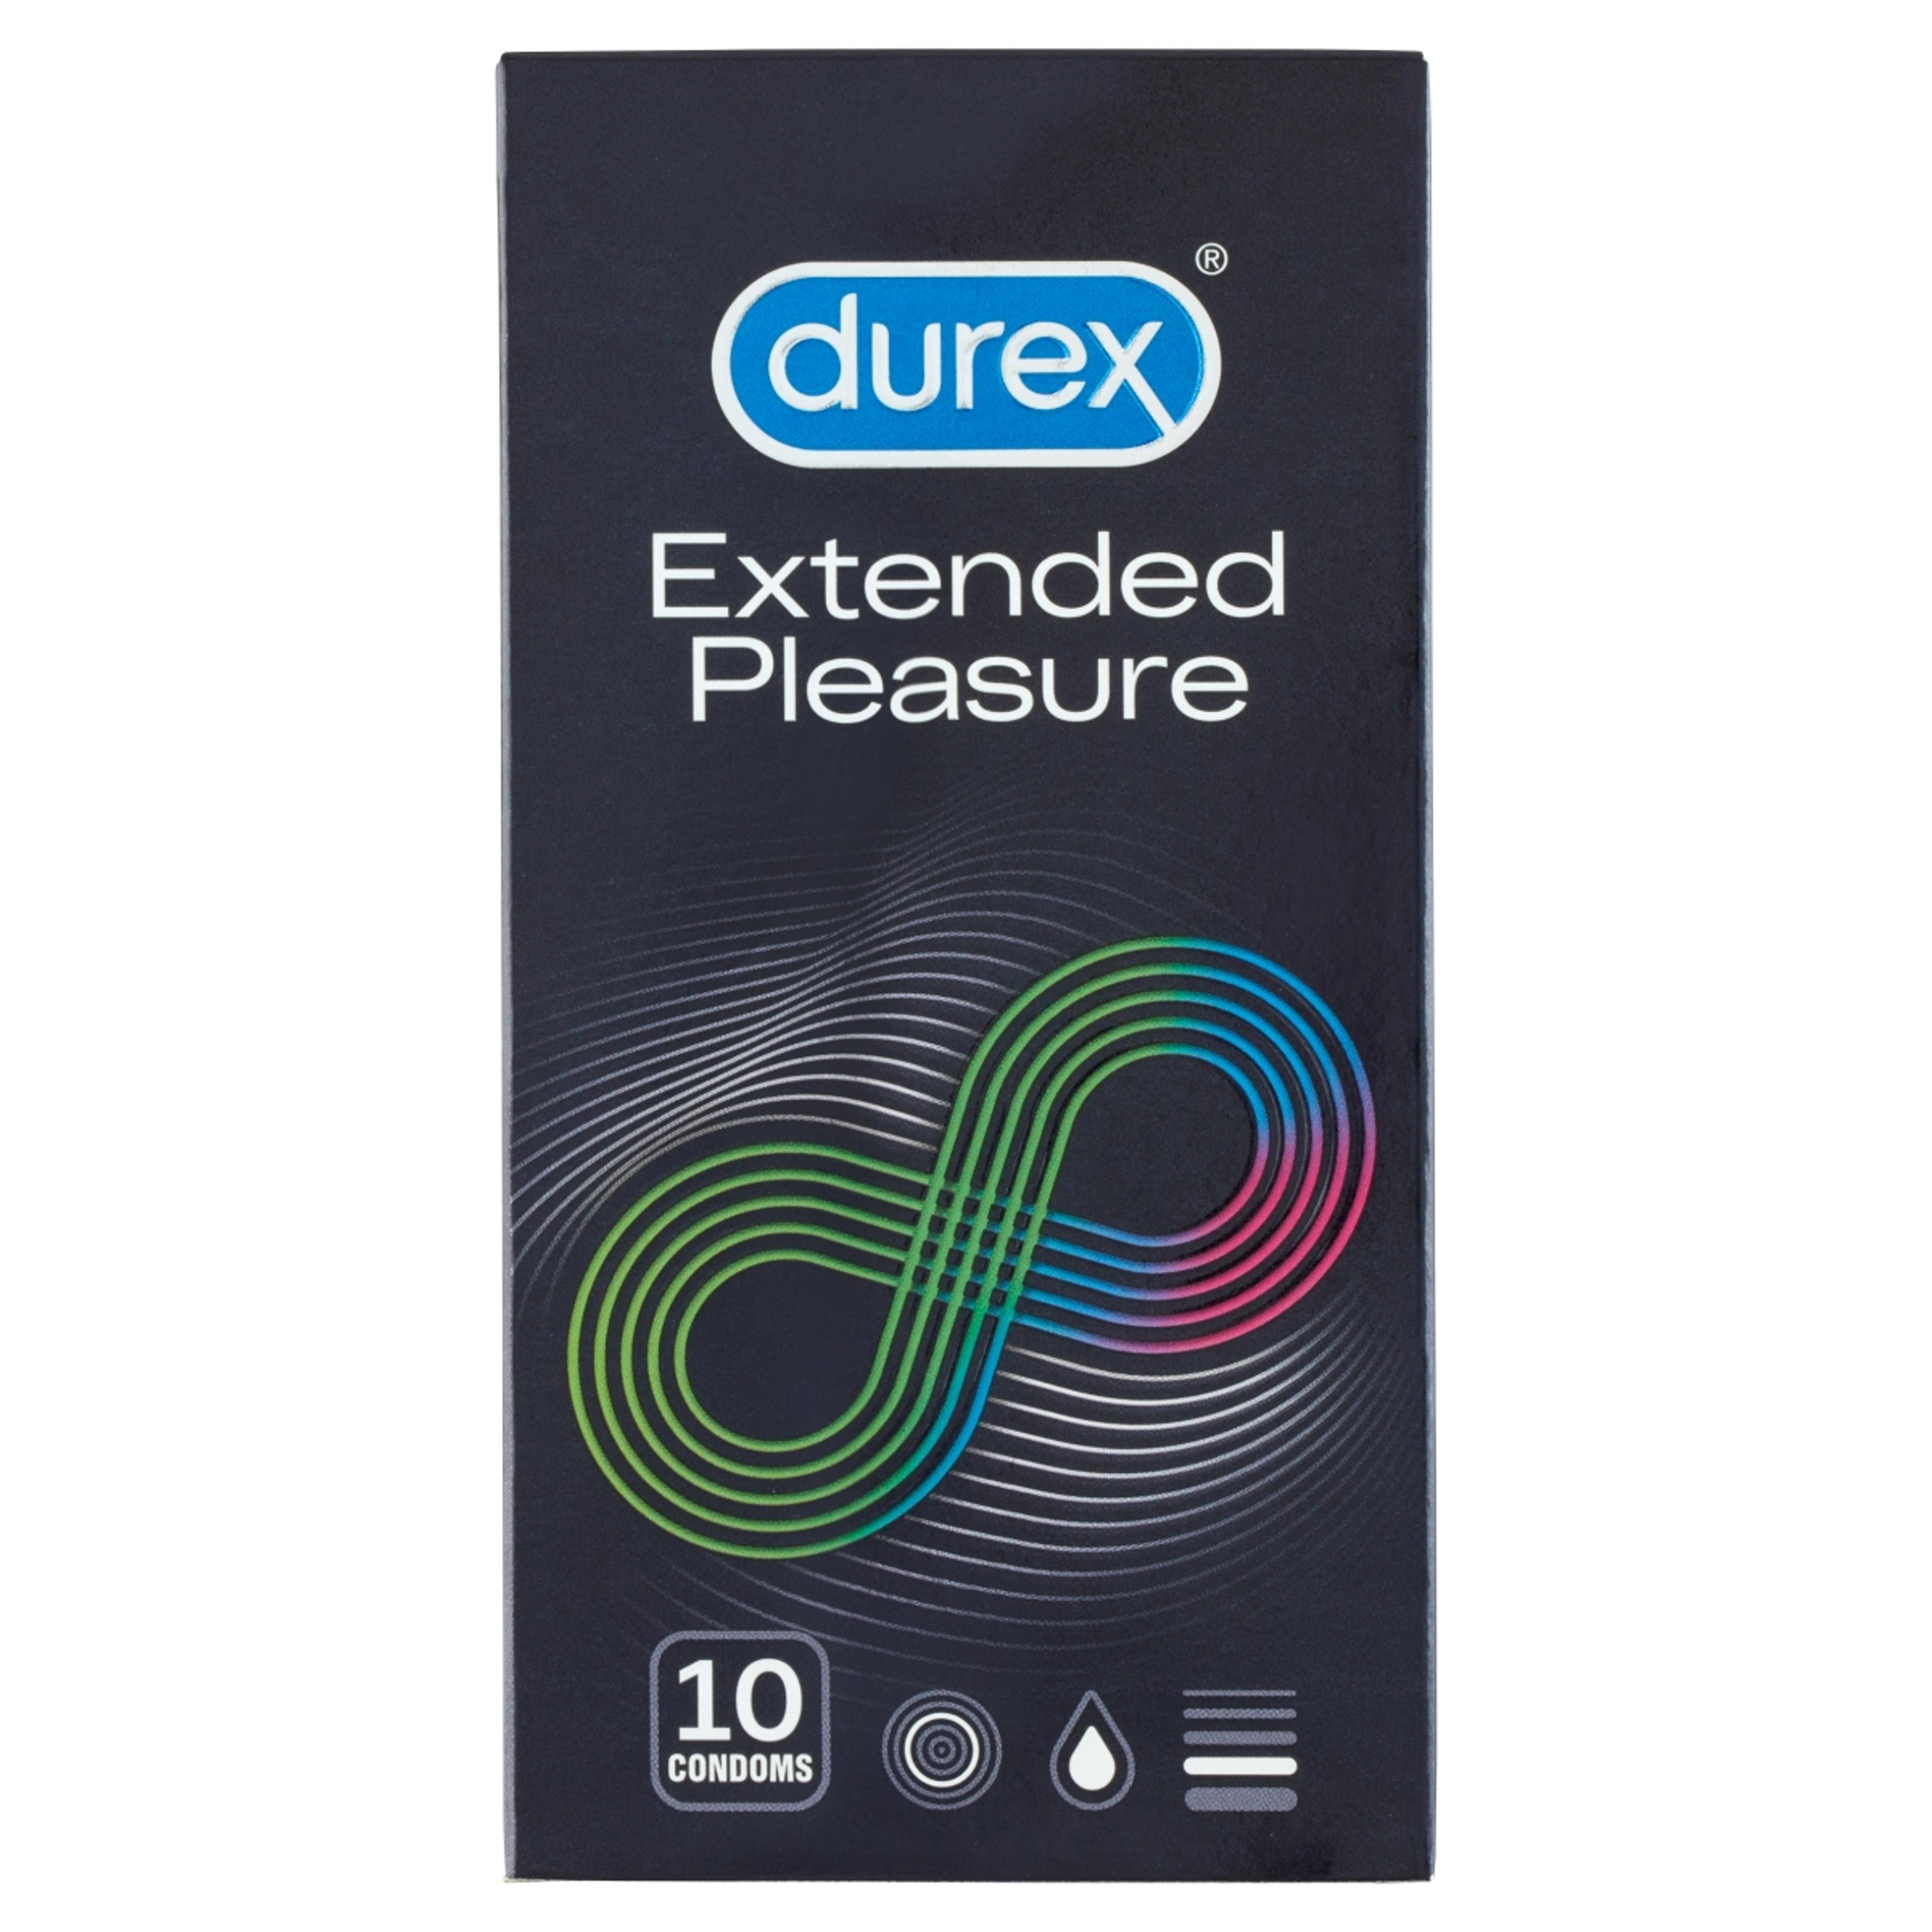 Durex ovszer extended pleasure - 10 db